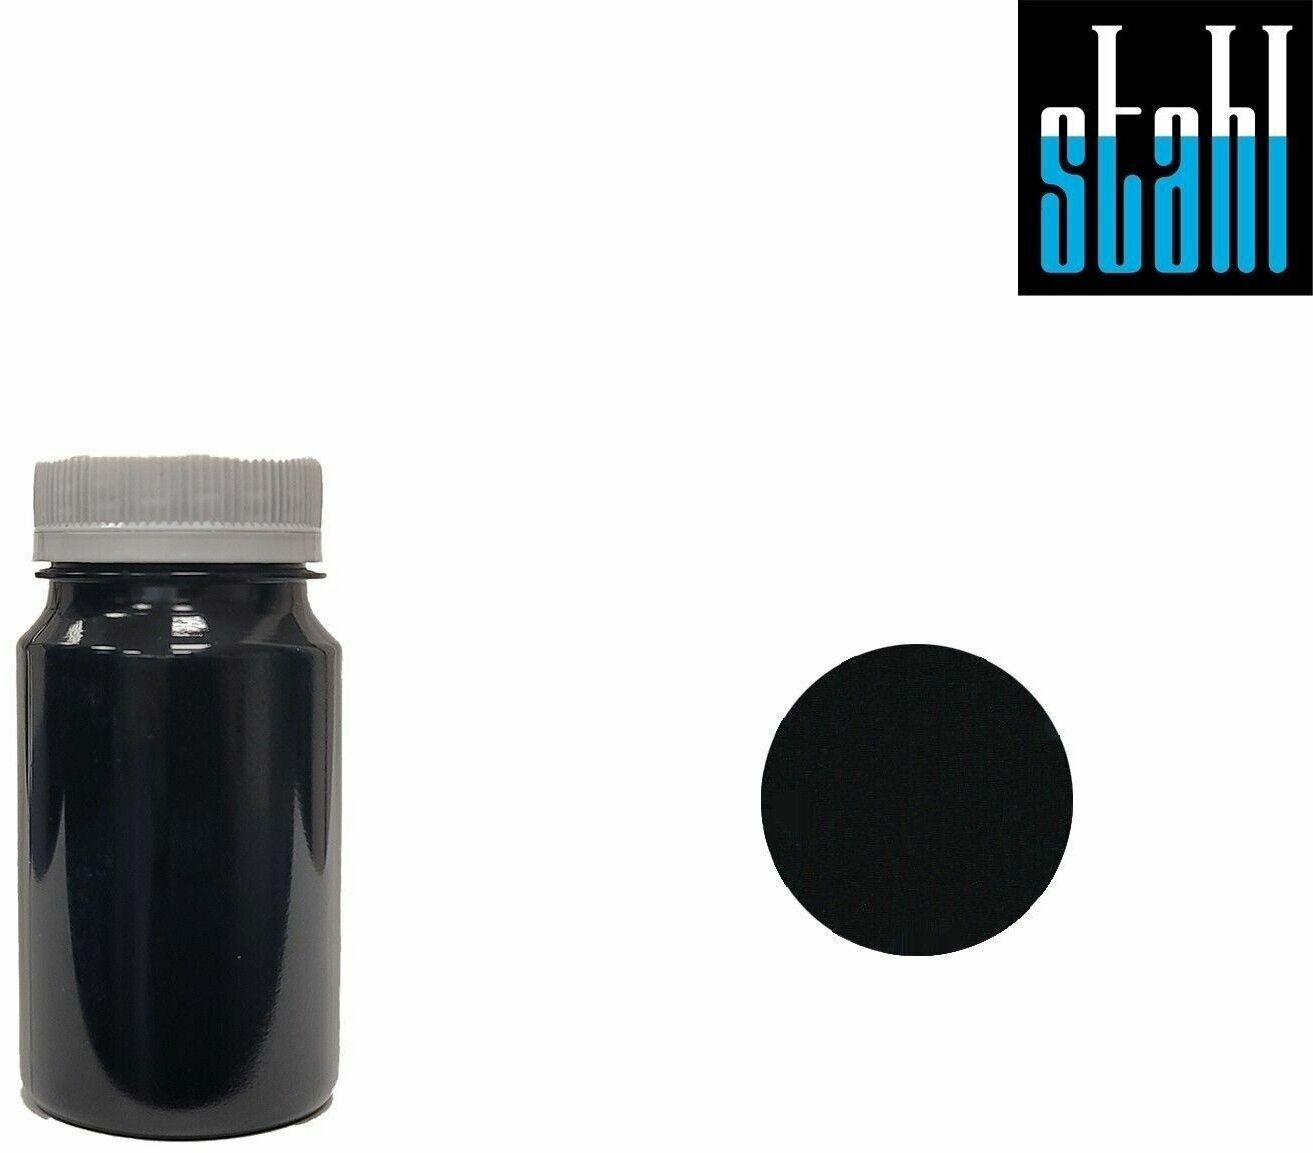 Краска Easy crust "Stahl" краска на водной основе, Черный, 100 мл